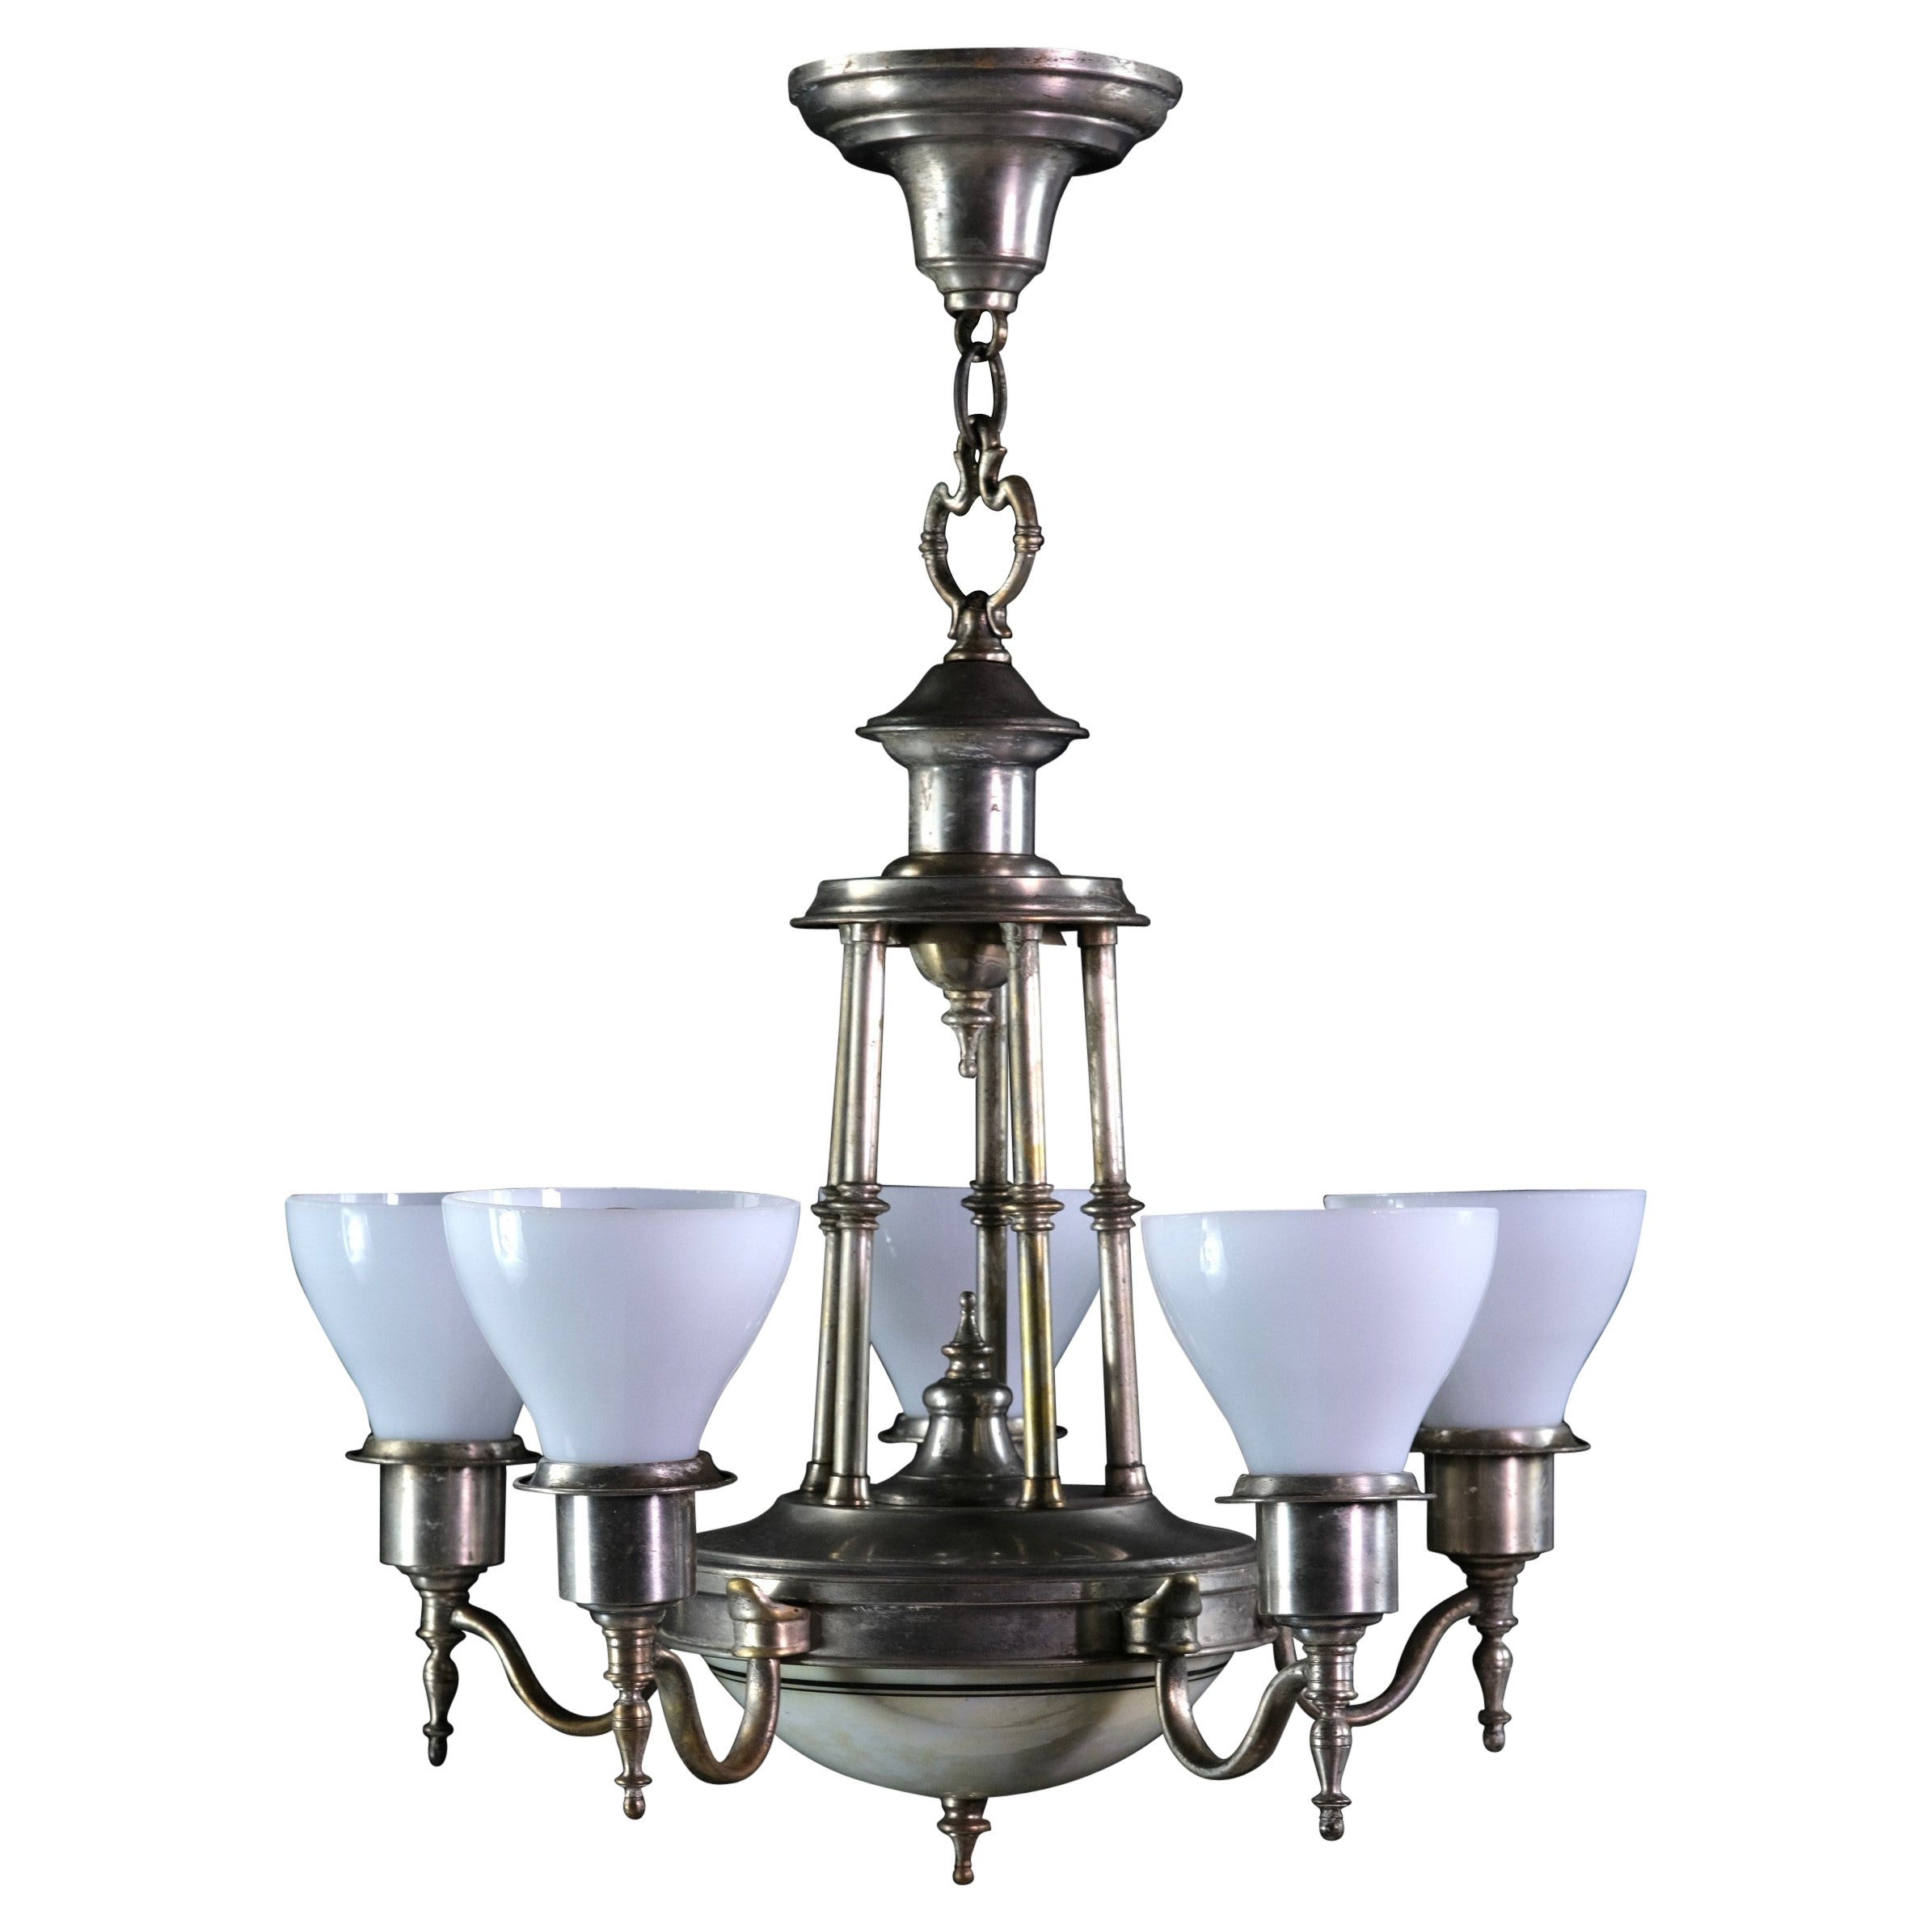 472m Vintage 40's Ceiling Light Lamp Fixture Chandelier 3 Lights beige 1of 2 